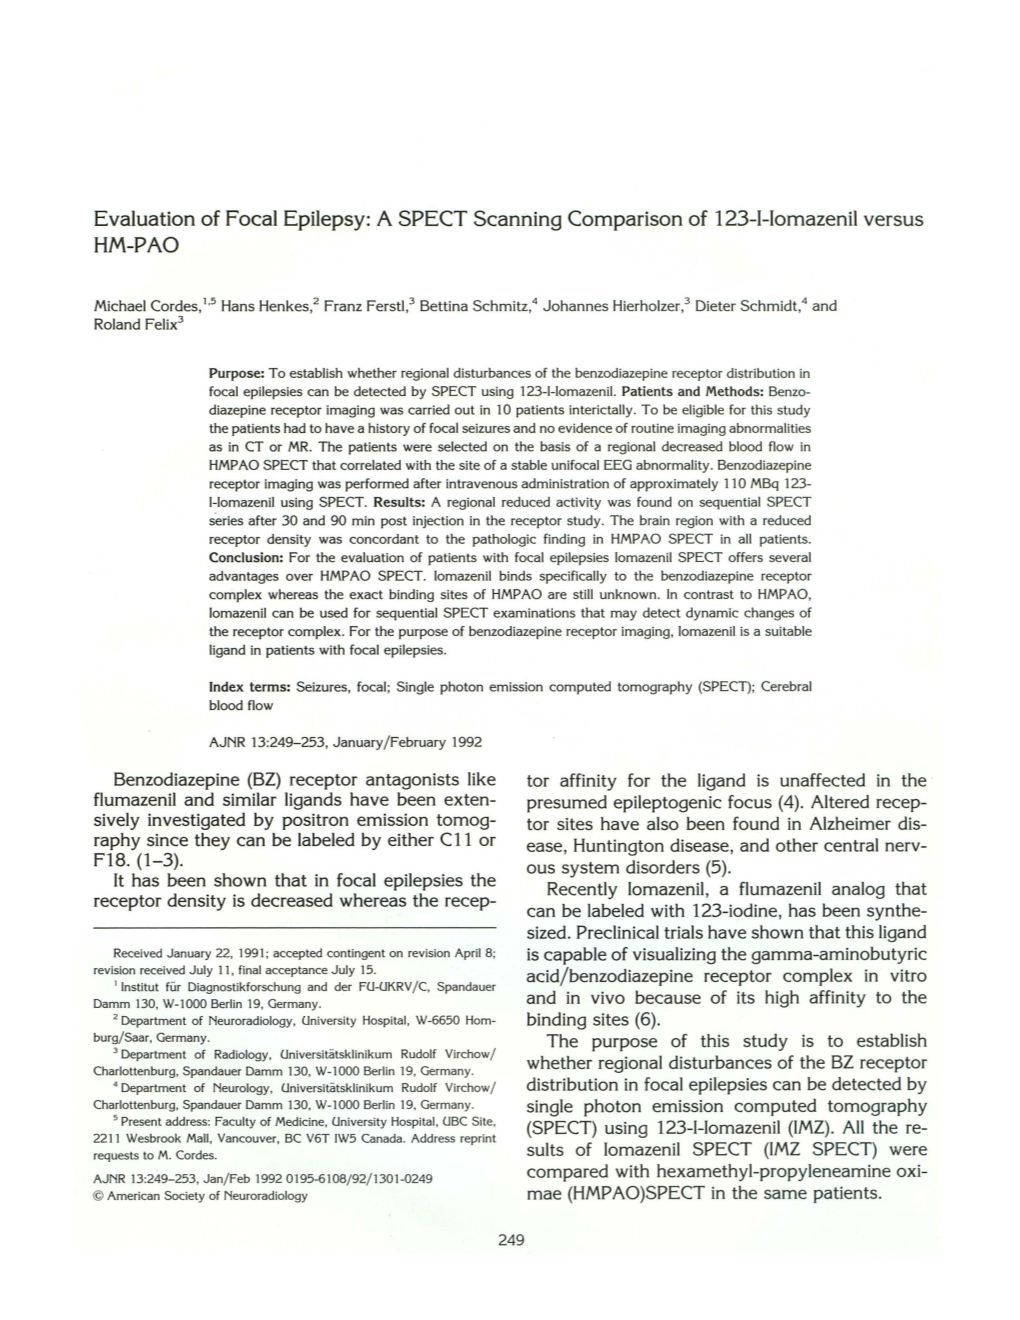 Evaluation of Focal Epilepsy: ASPECT Scanning Comparison of 123-1-Iomazenil Versus HM-PAO